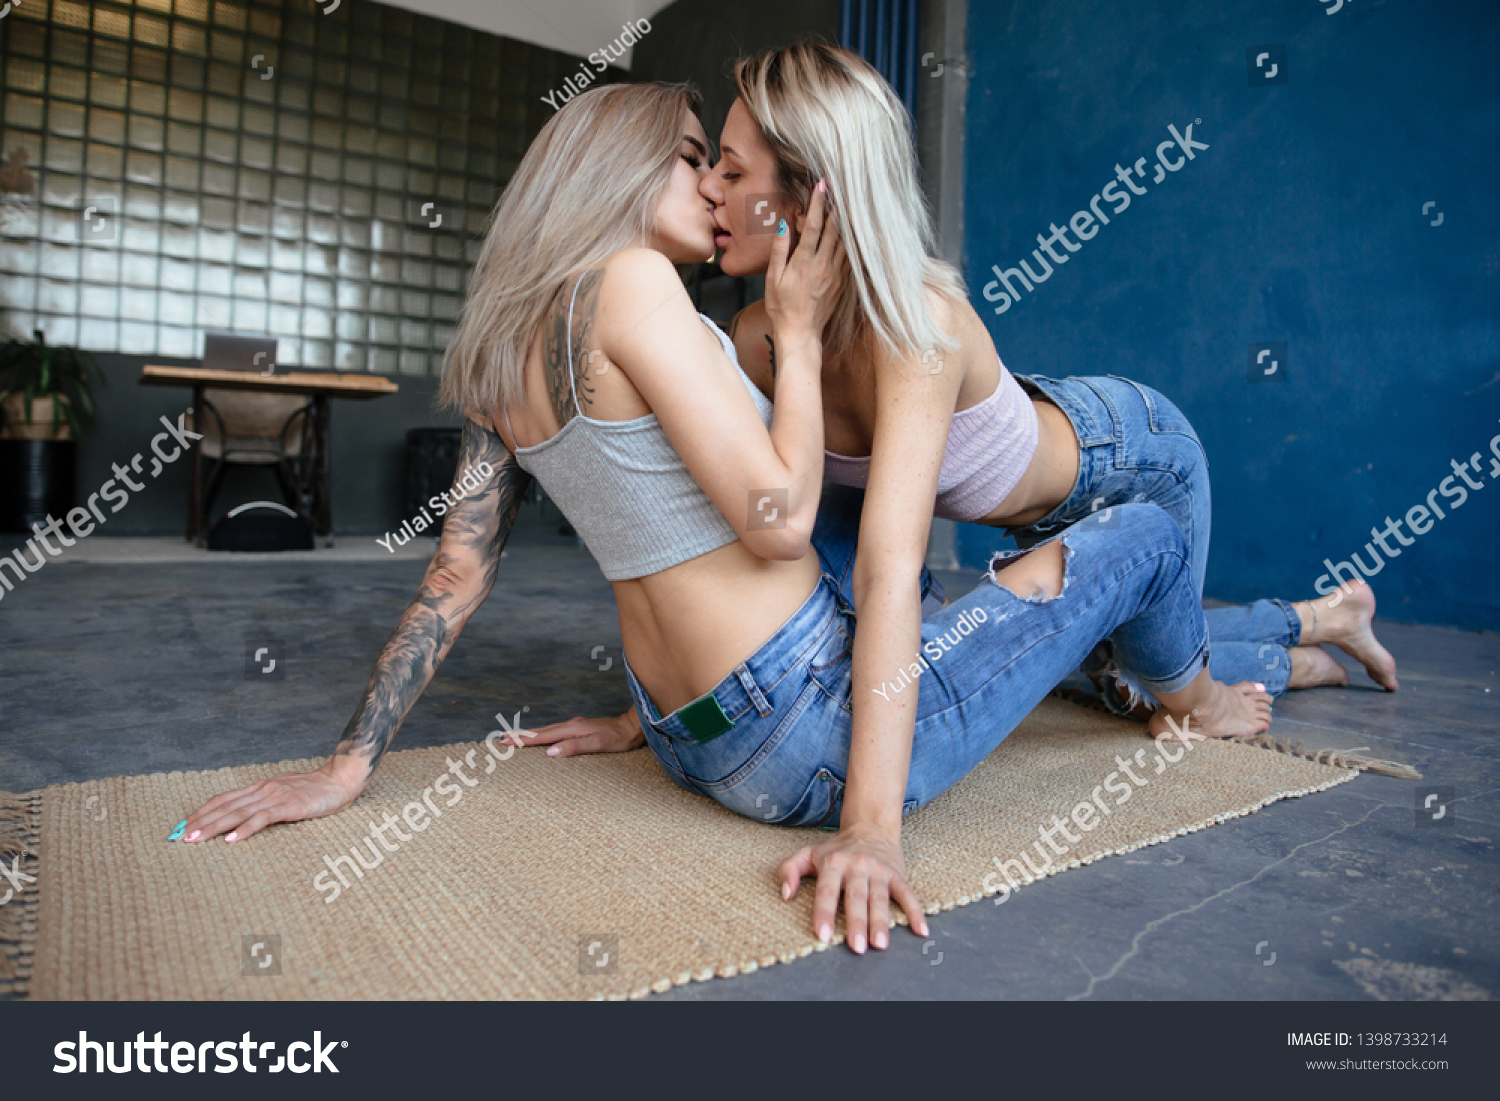 david hunsicker add passionate lesbian kissing photo